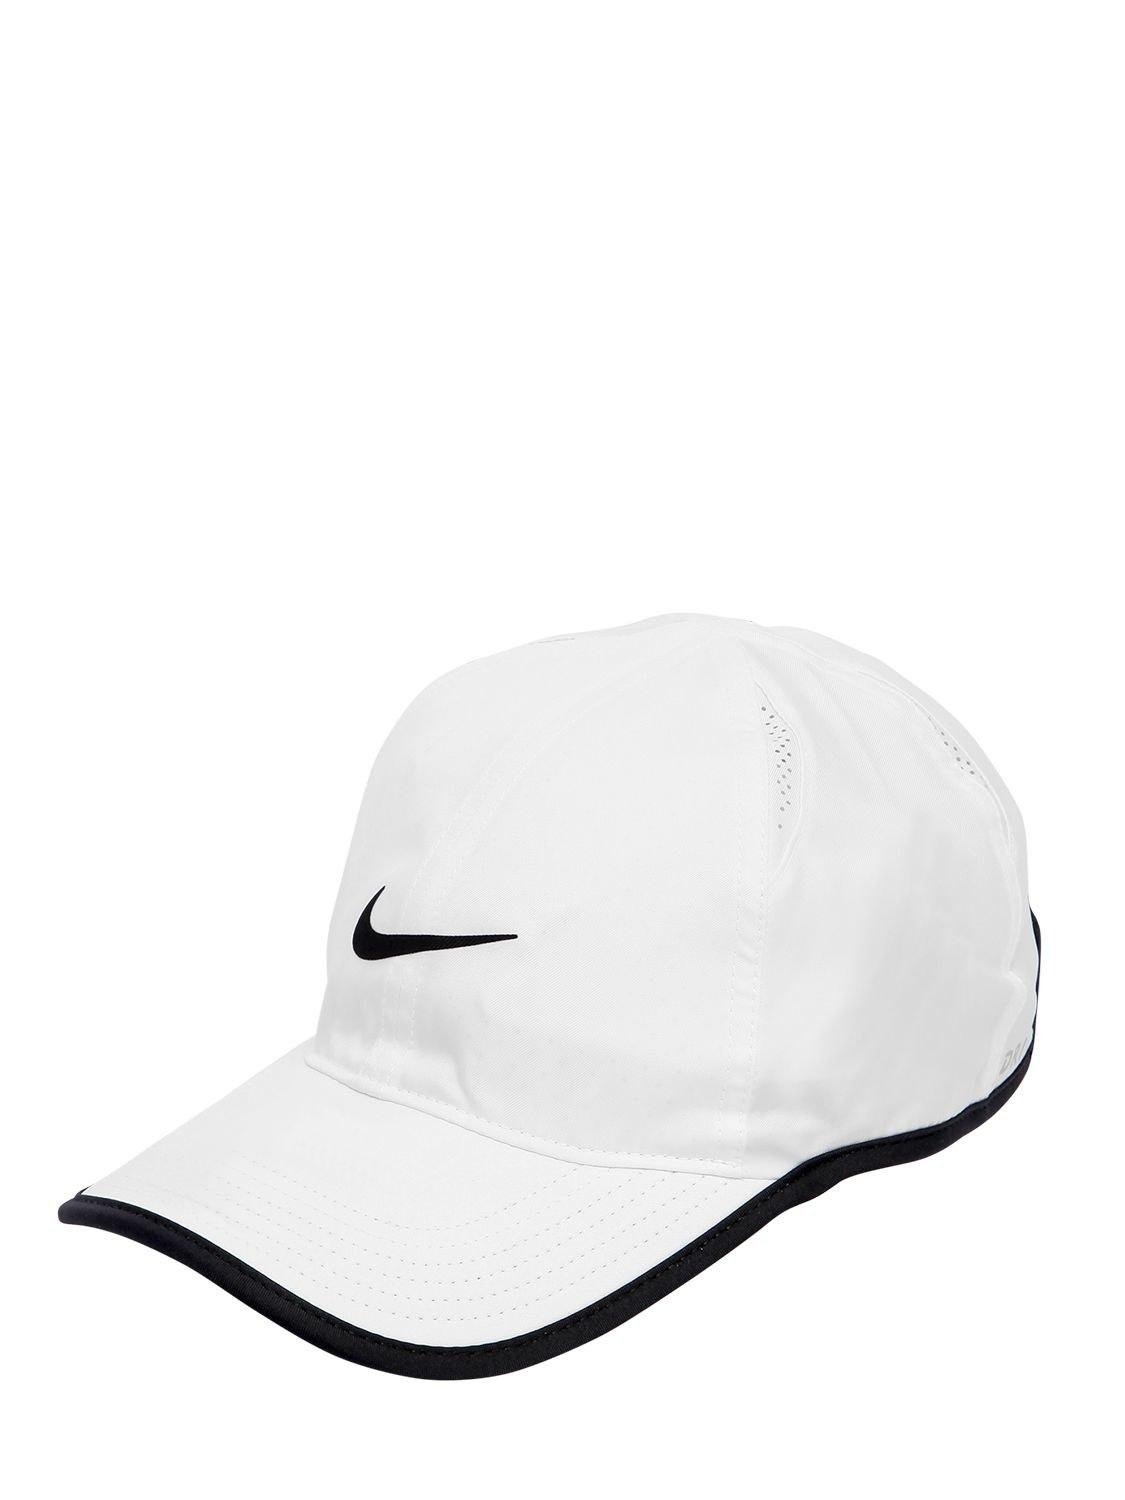 Nike Court Tennis Hat in White for Men - Lyst